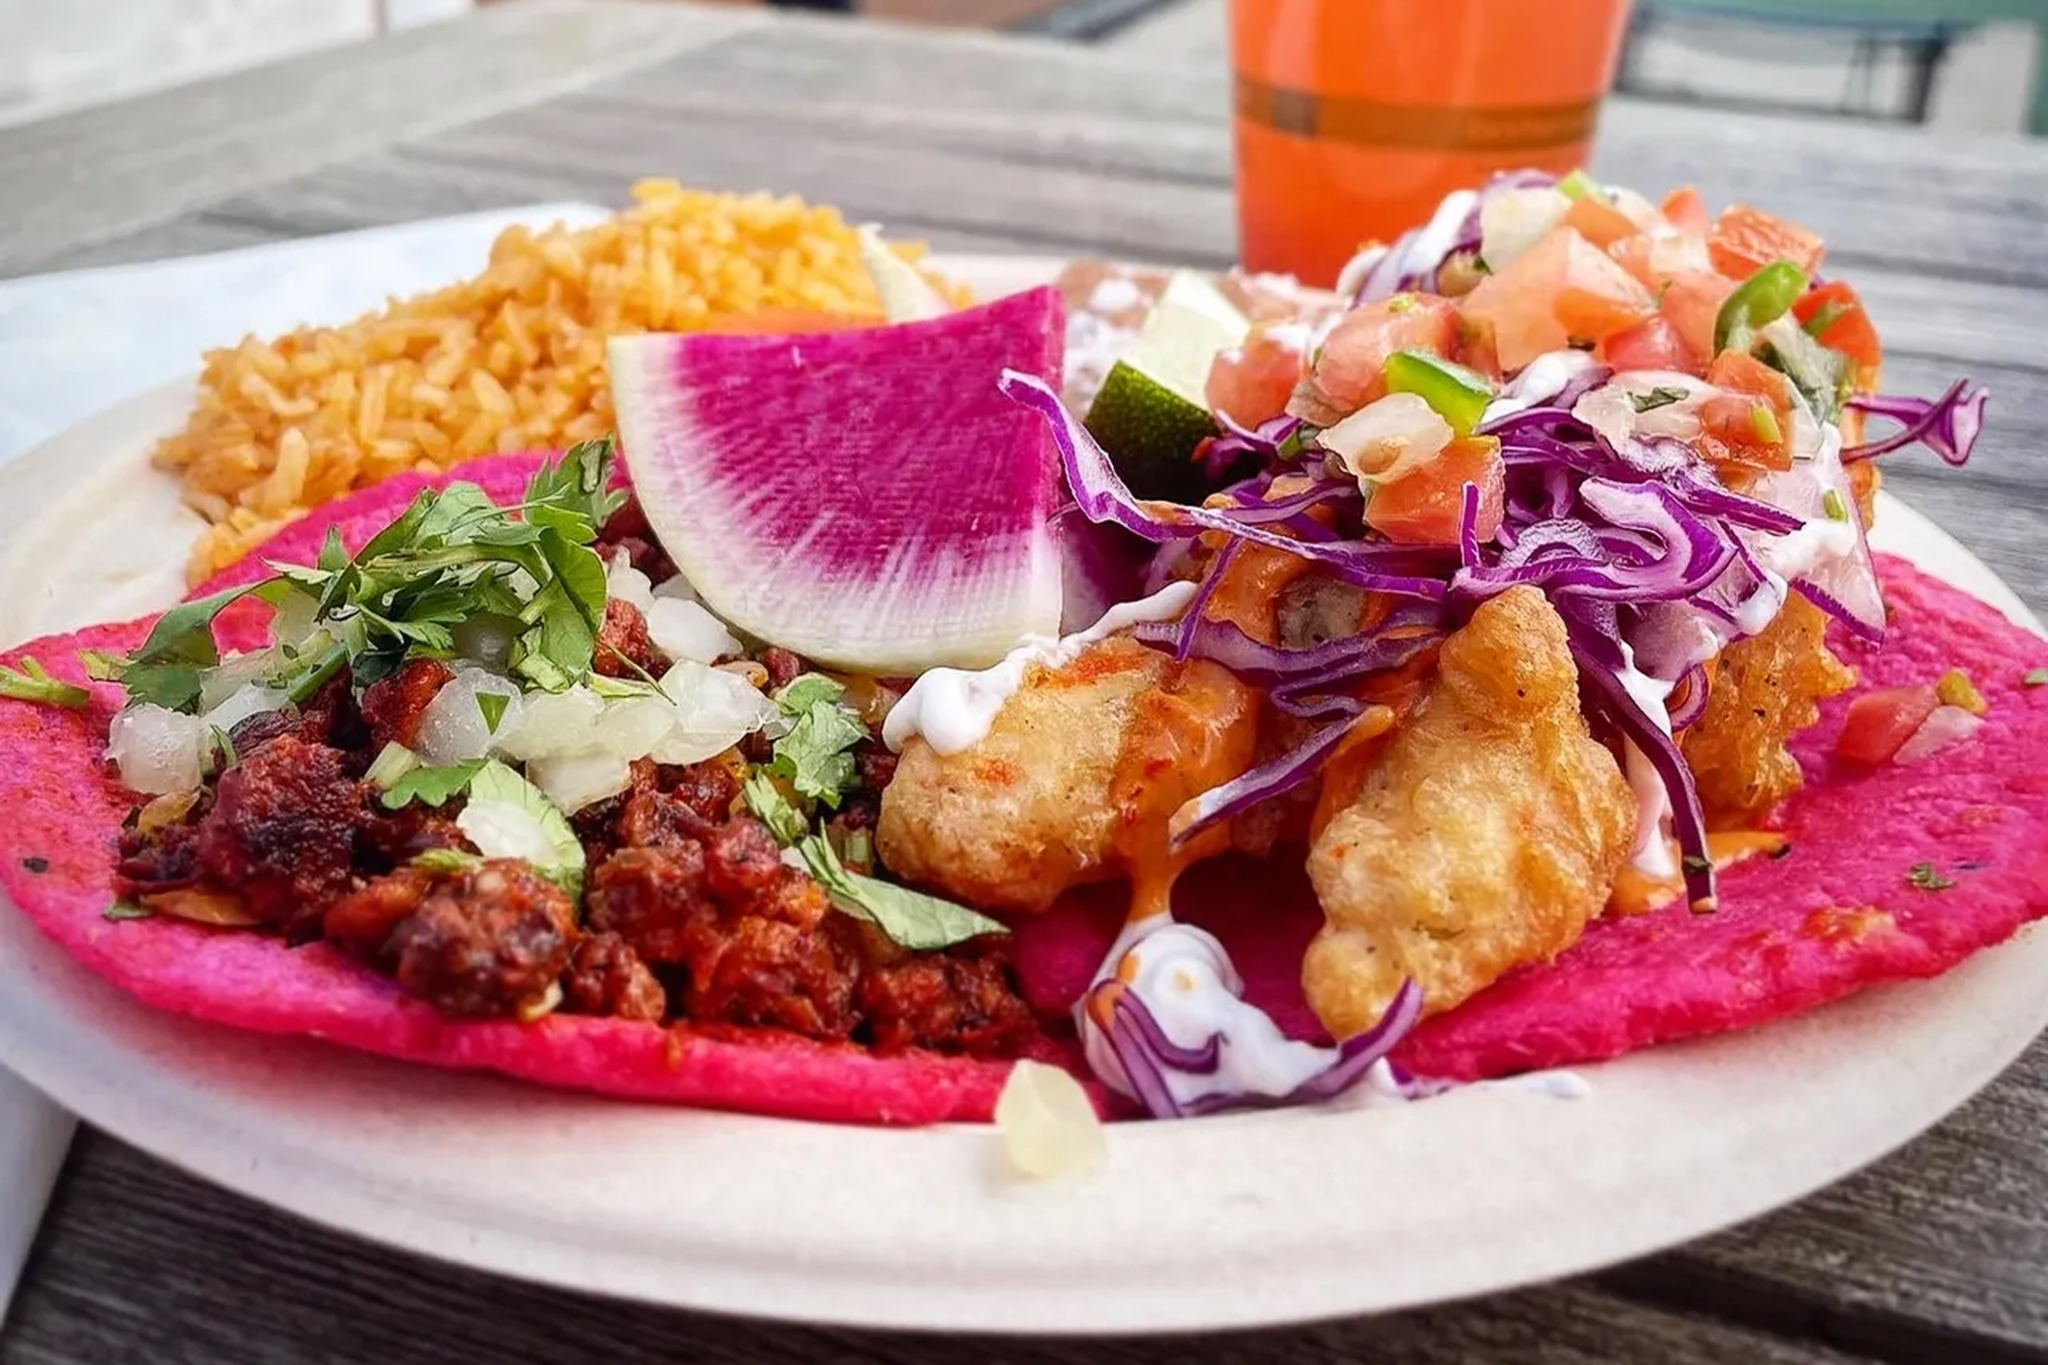 The Oakland Restaurant Serving Up Those Viral Hot Pink Tacos